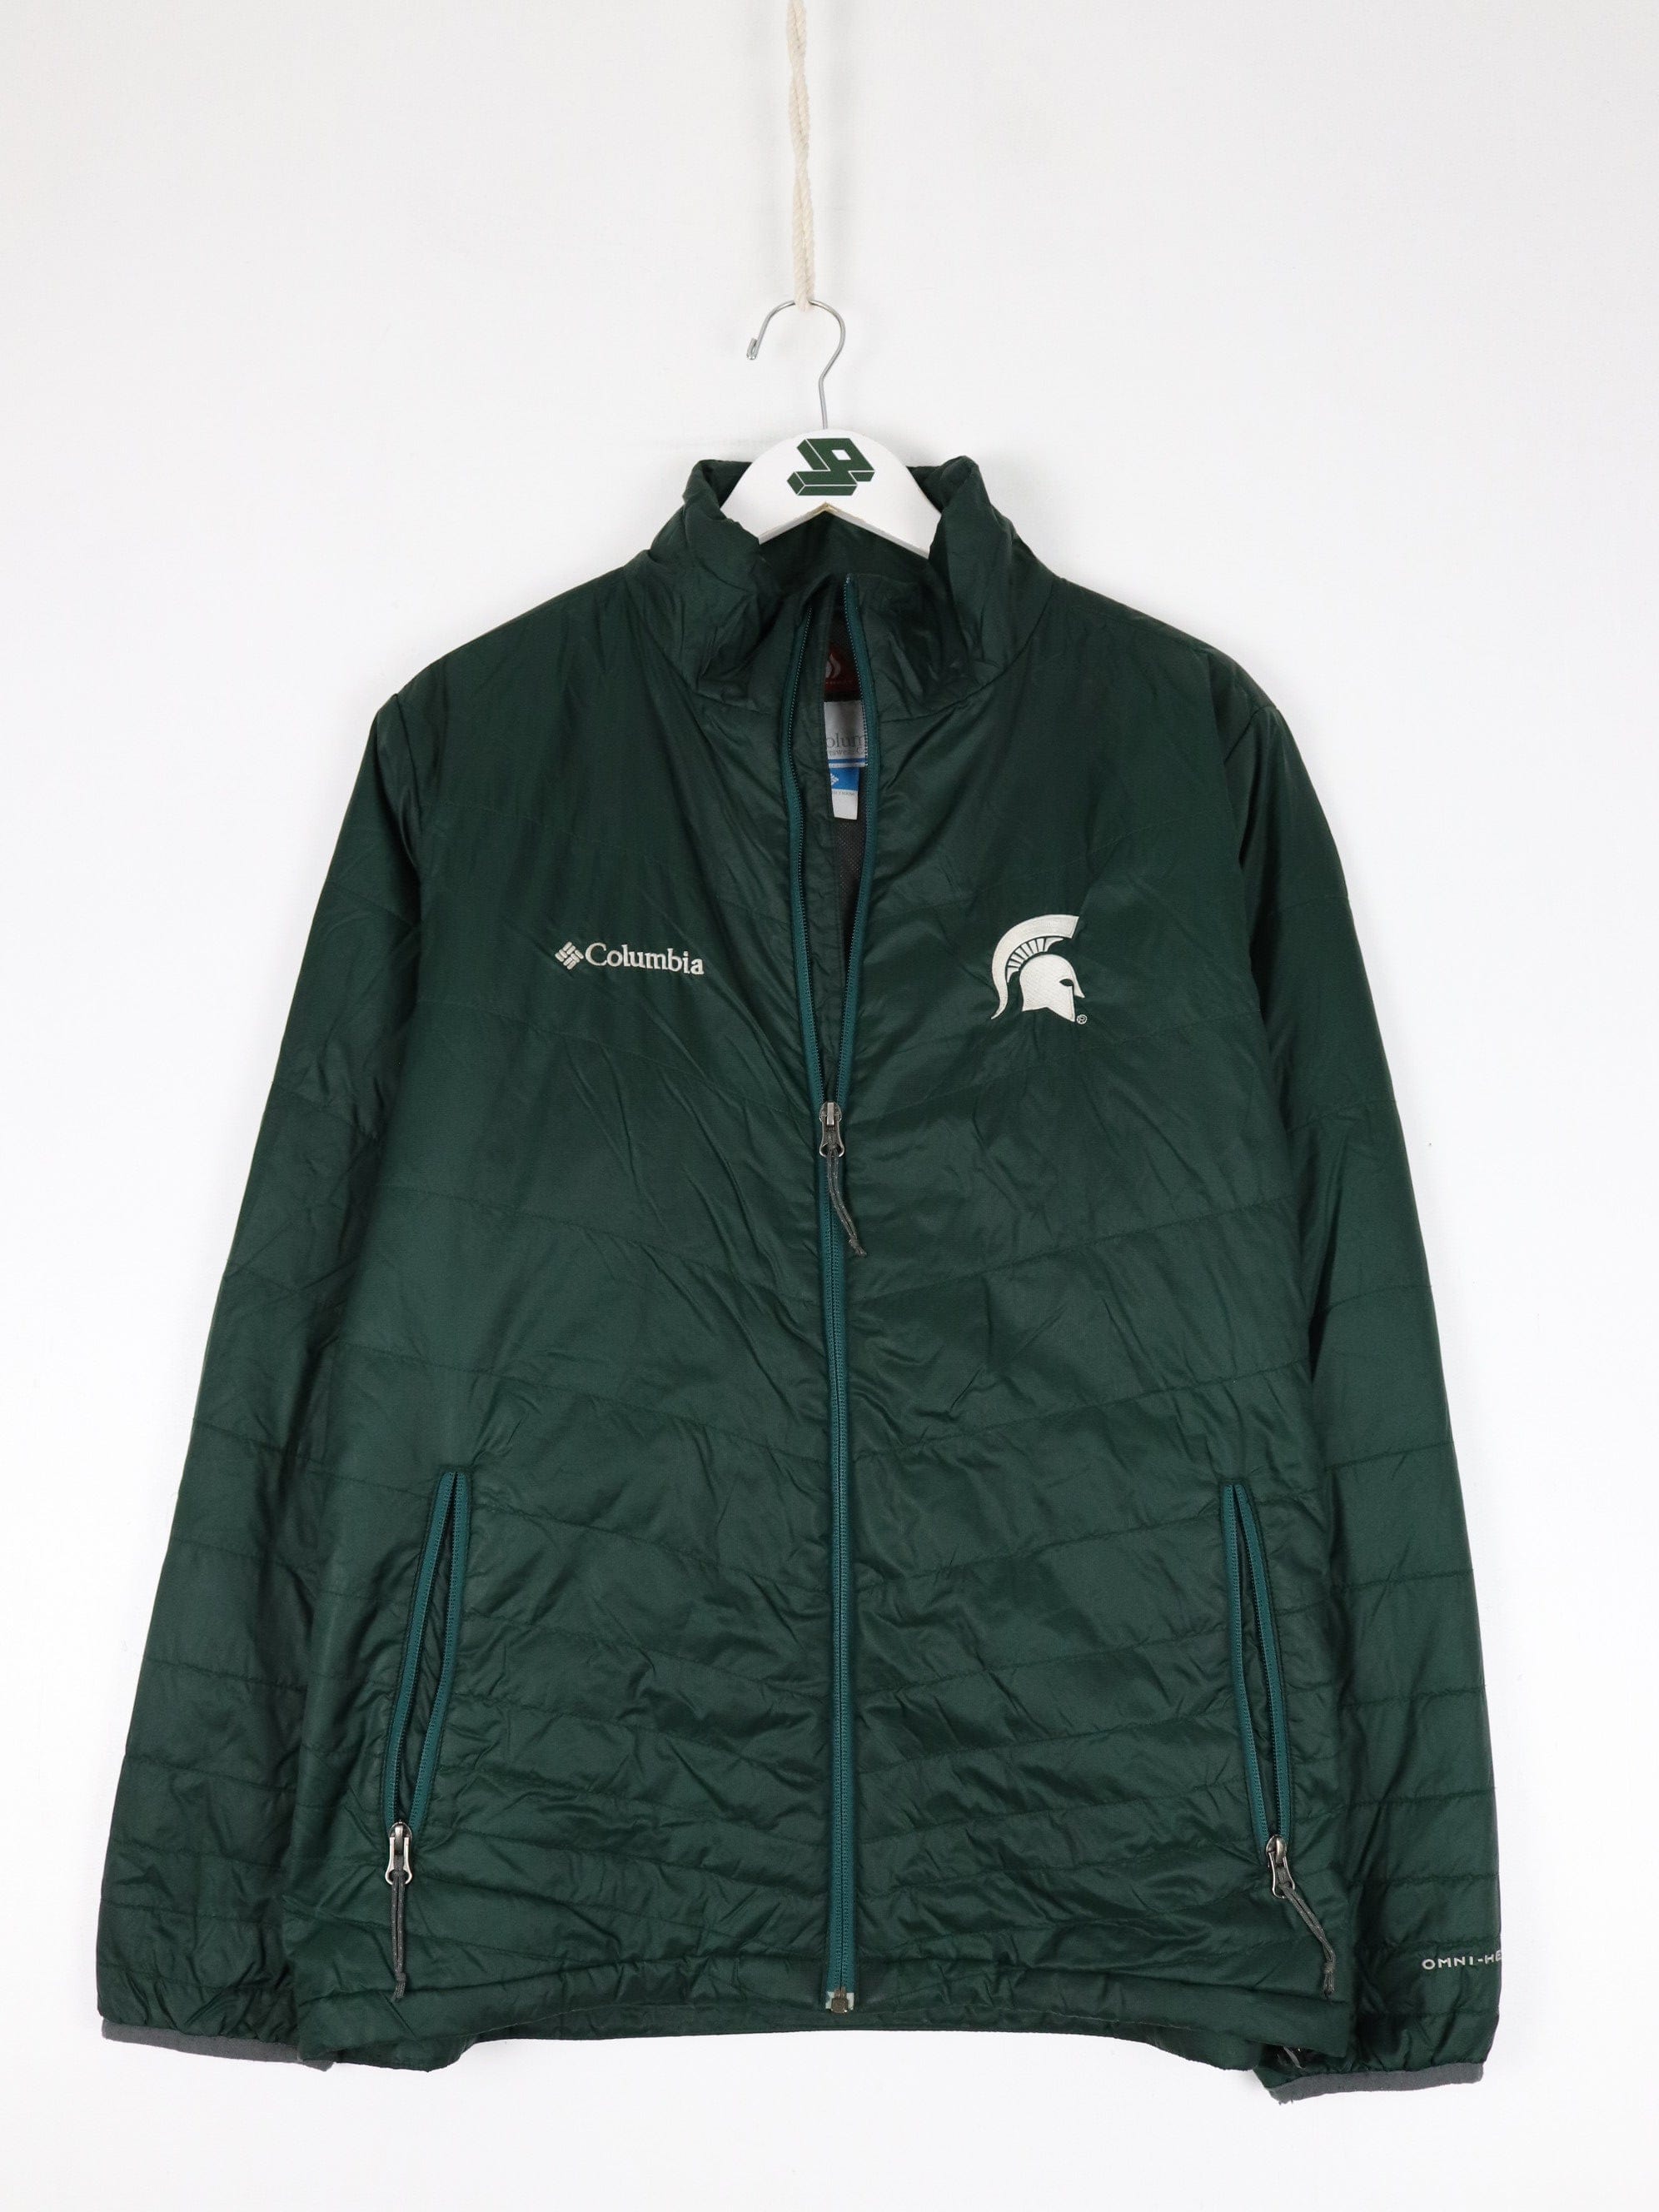 Columbia Jacket Mens Medium Green Michigan State College Coat